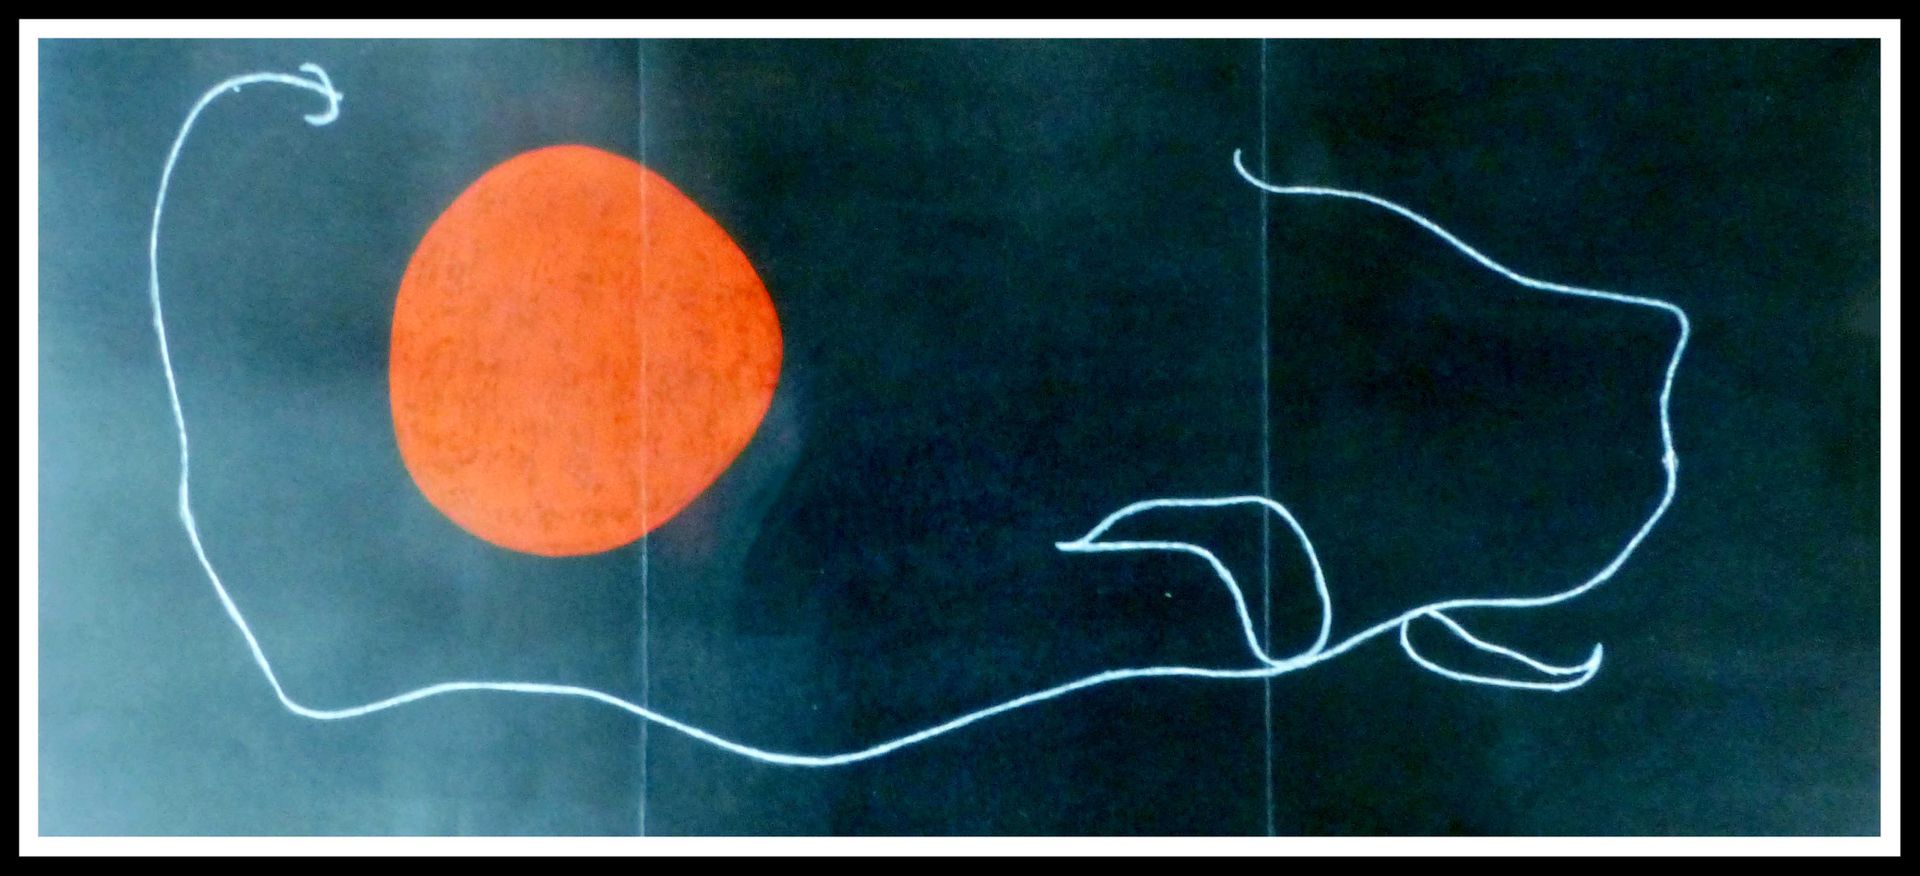 Joan Miro Joan MIRO (1893 - 1983)

Zusammensetzung roter Fleck auf schwarzem Hin&hellip;